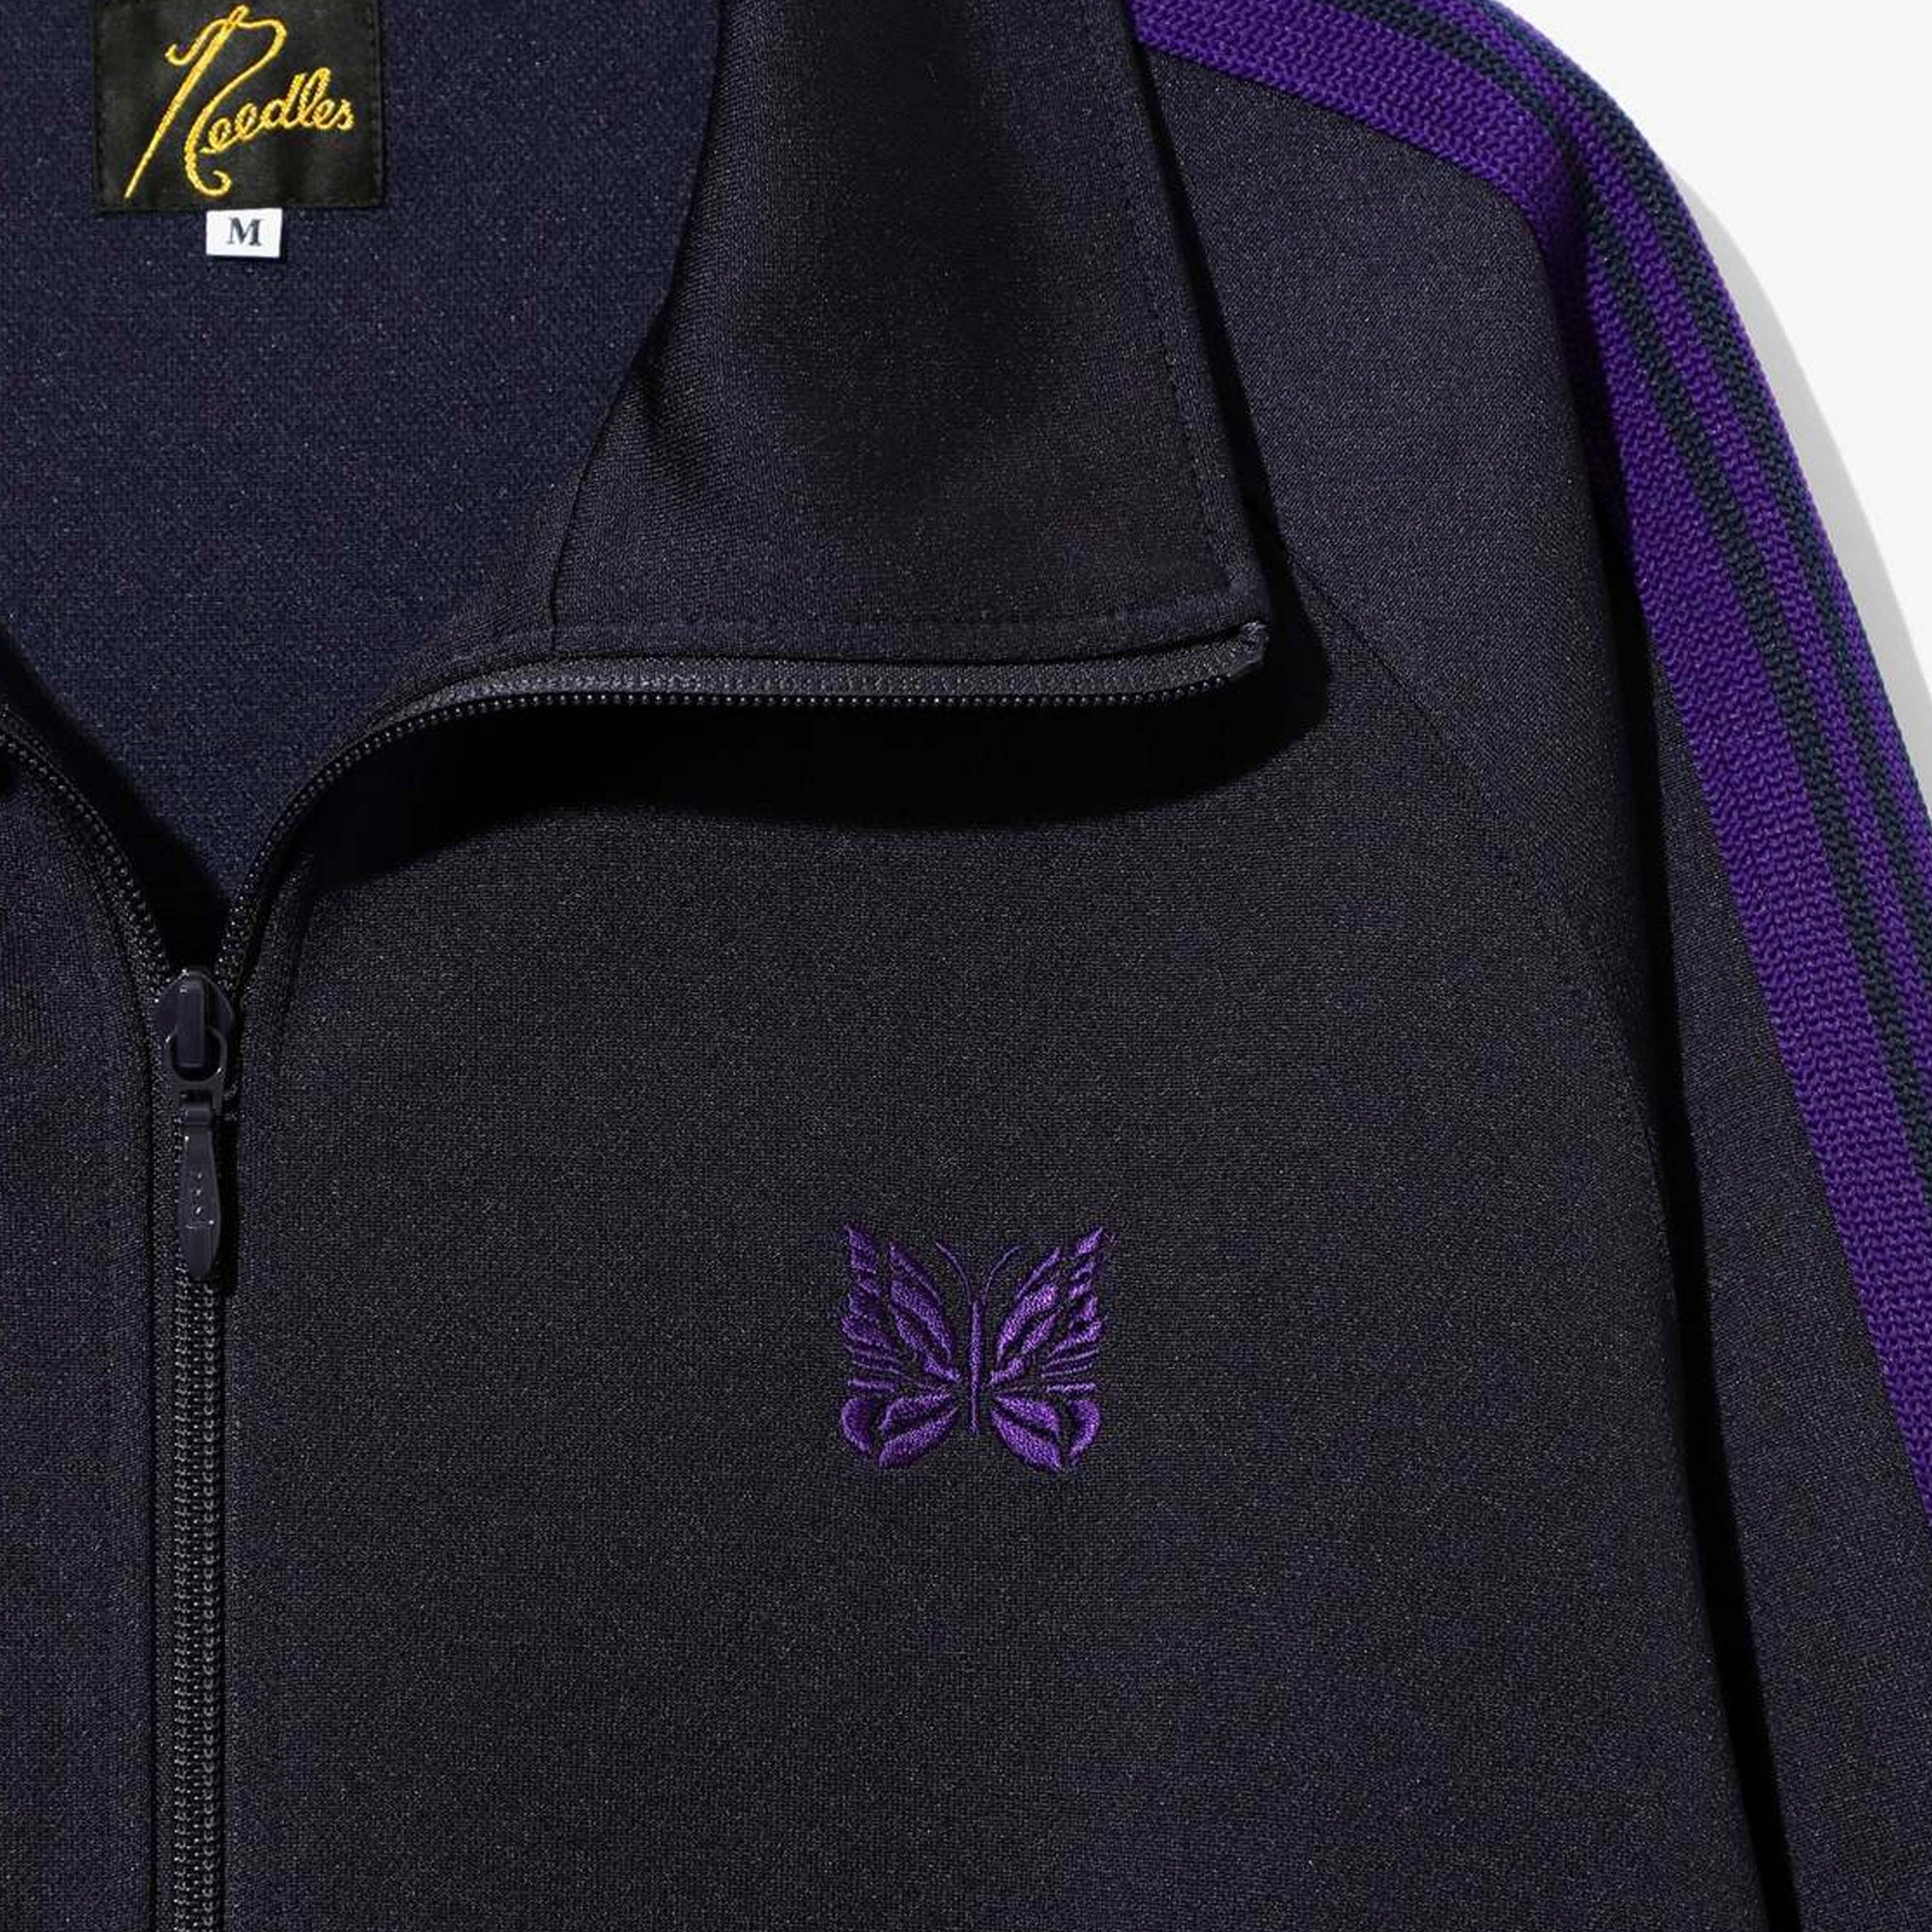 Adidas Men's Jacket - Purple - M